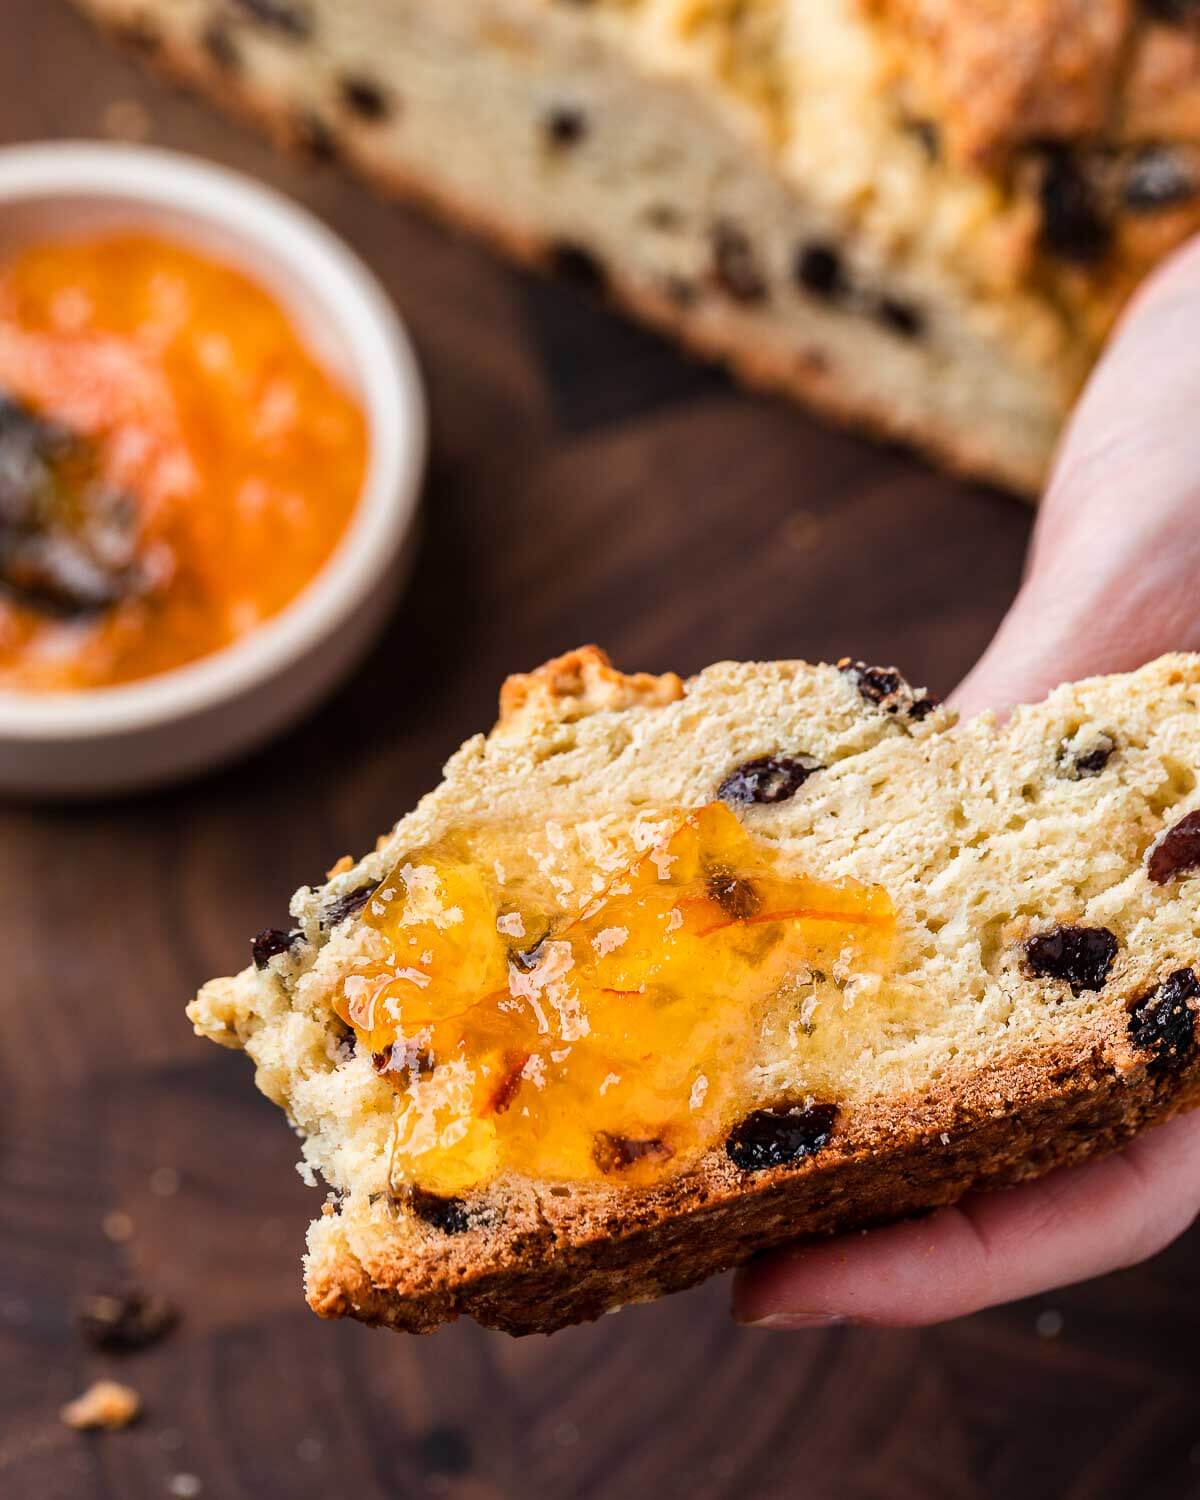 Hands holding slice of Irish soda bread with orange marmalade.